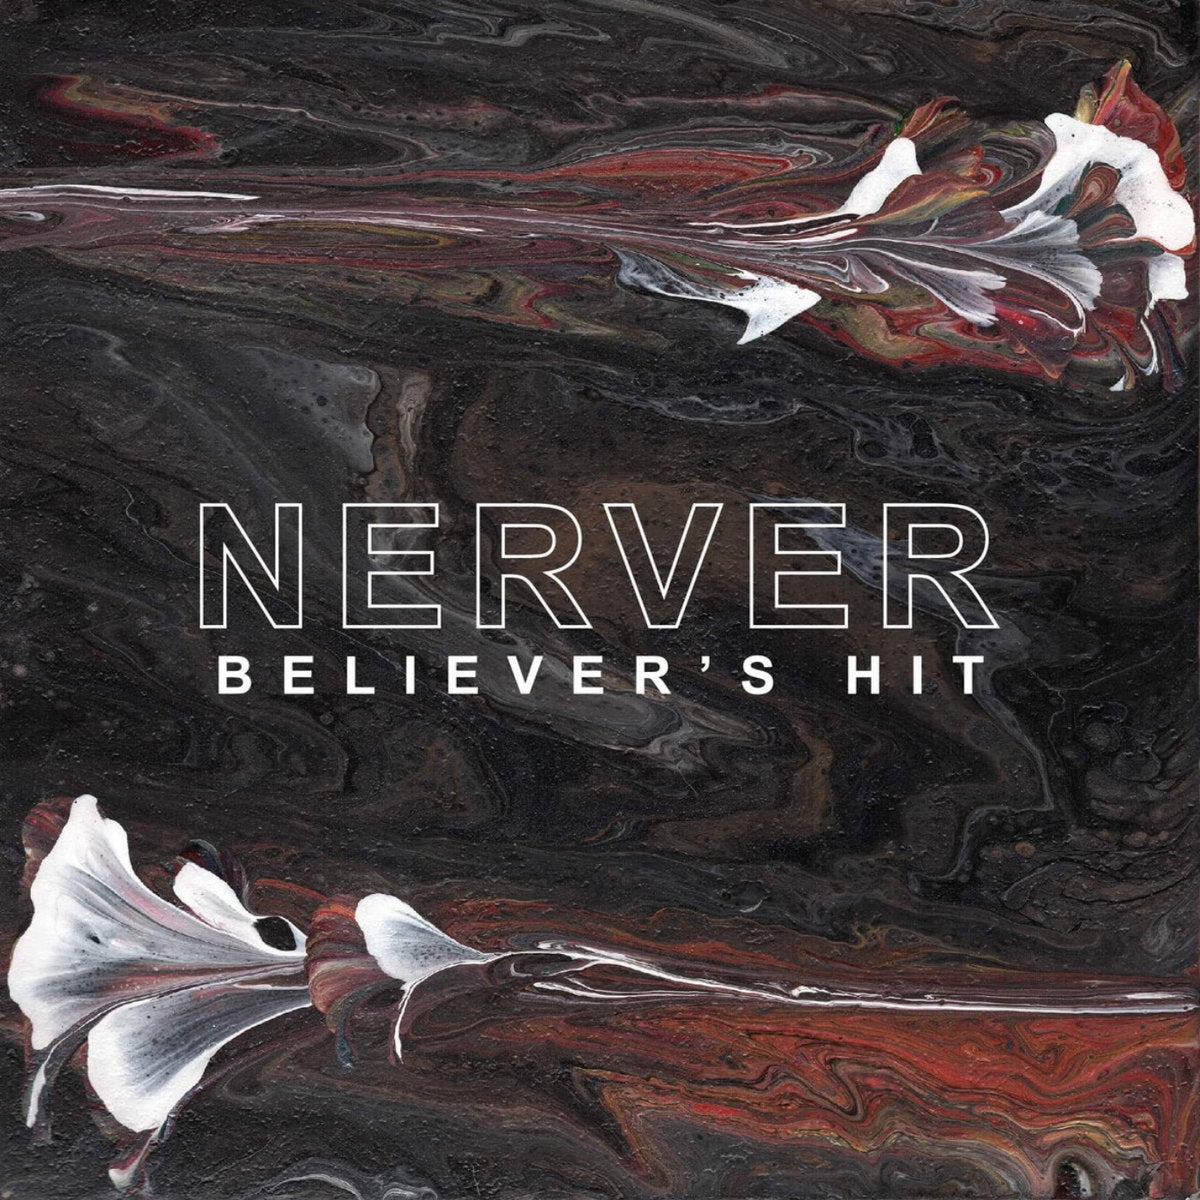 Nerver - "Believer's Hit" Compact Disc